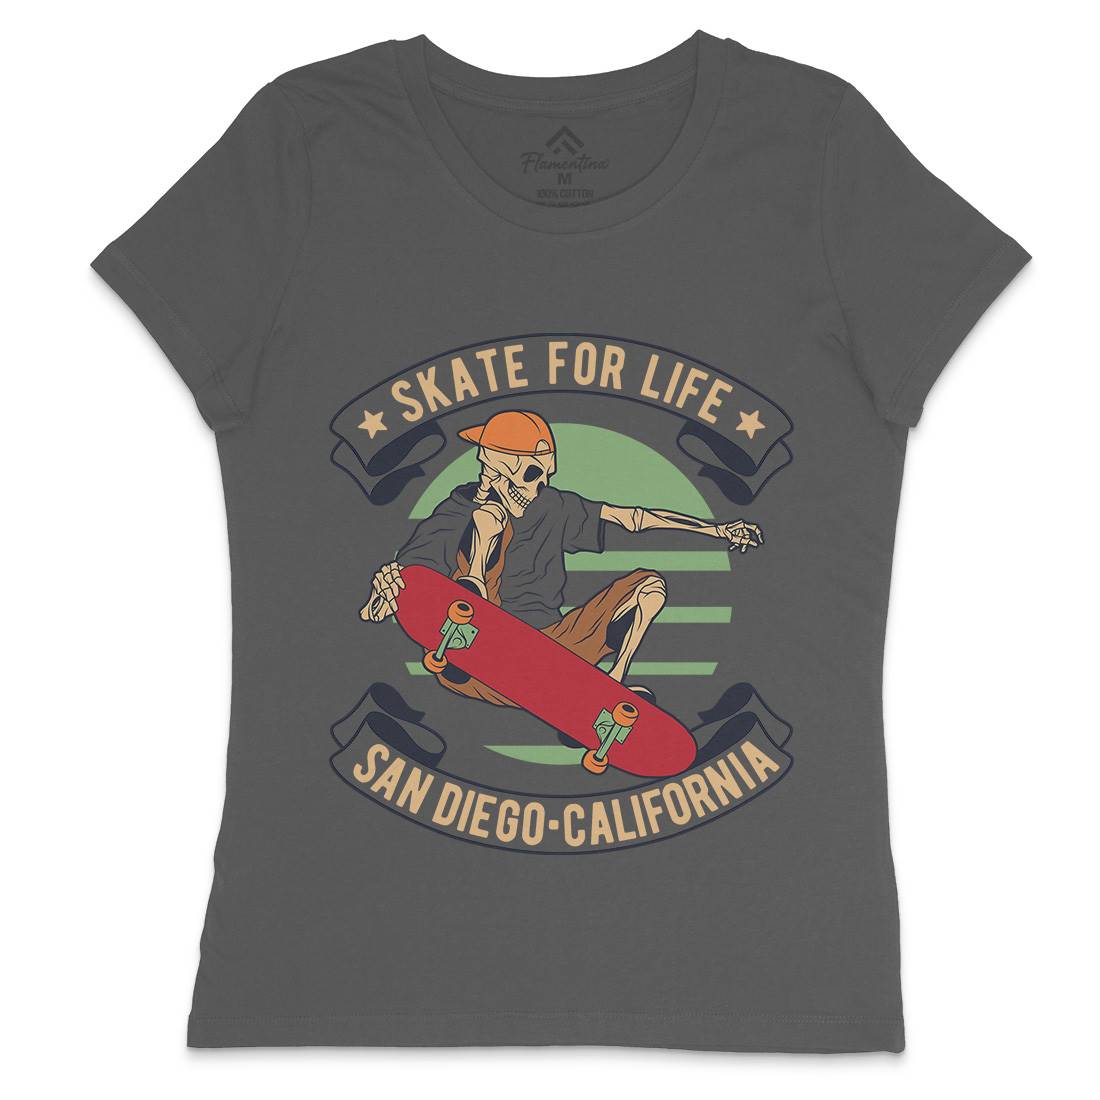 For Life Womens Crew Neck T-Shirt Skate D970